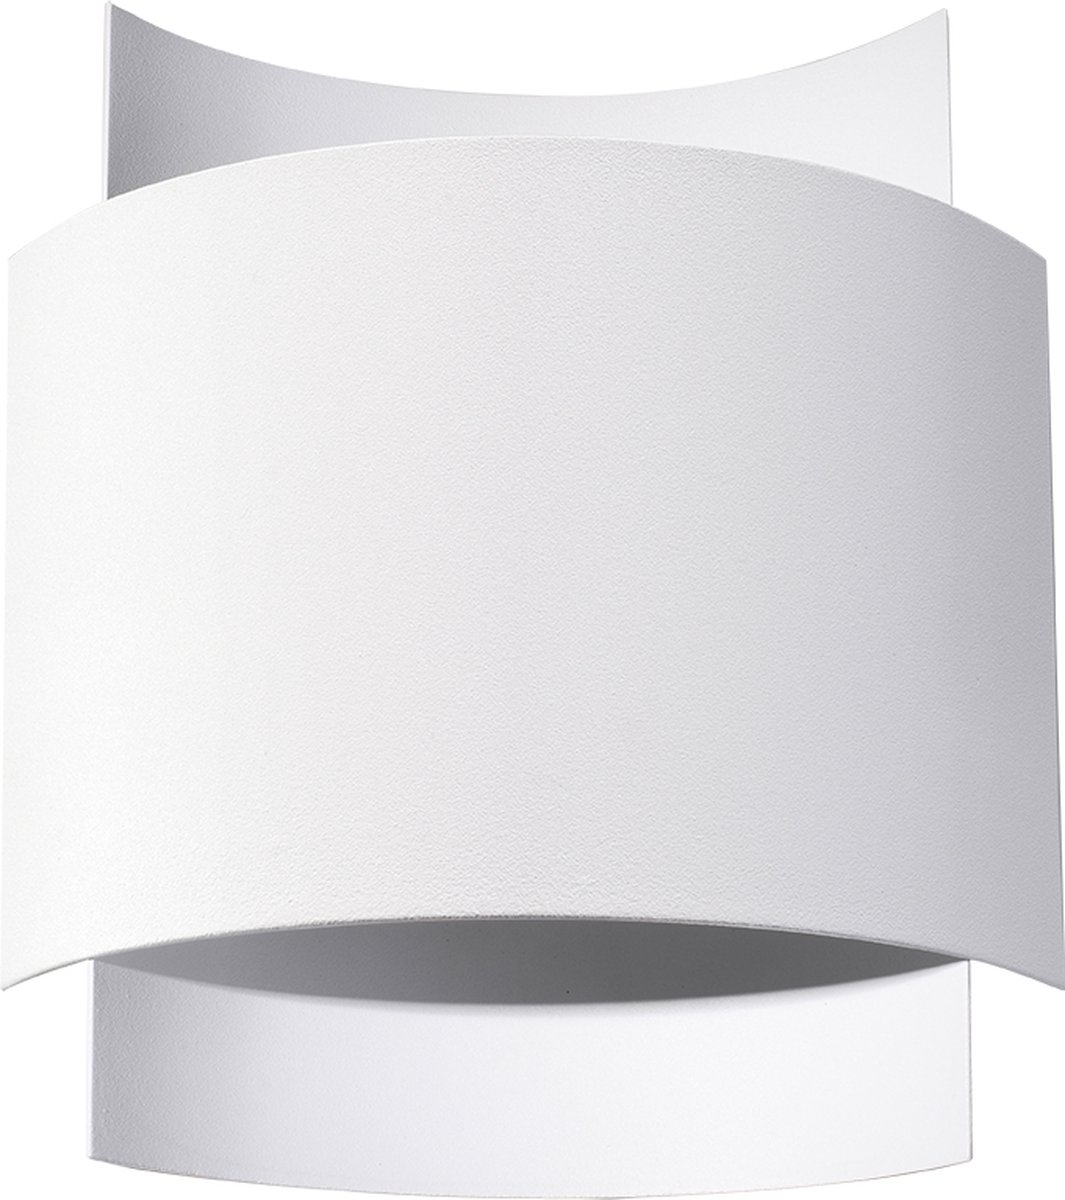 Light Your Home Designer's Lightbox Shades Wandlamp - Modern - Metaal - 1xG9 - Woonkamer - Eetkamer - Wit